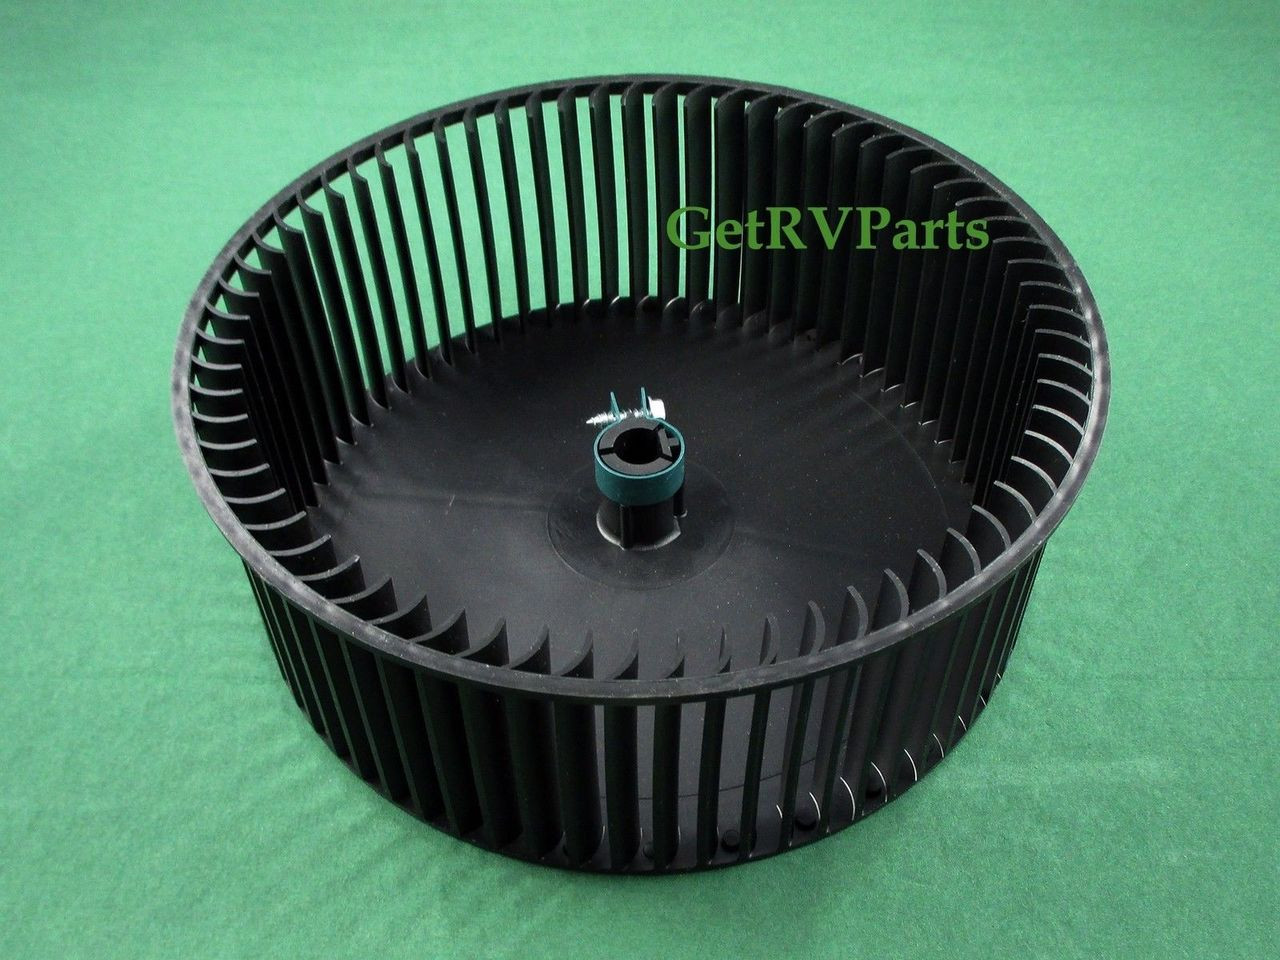 Dometic 3310378000 RV AC Air Conditioner Blower Wheel Plastic - Get RV Parts